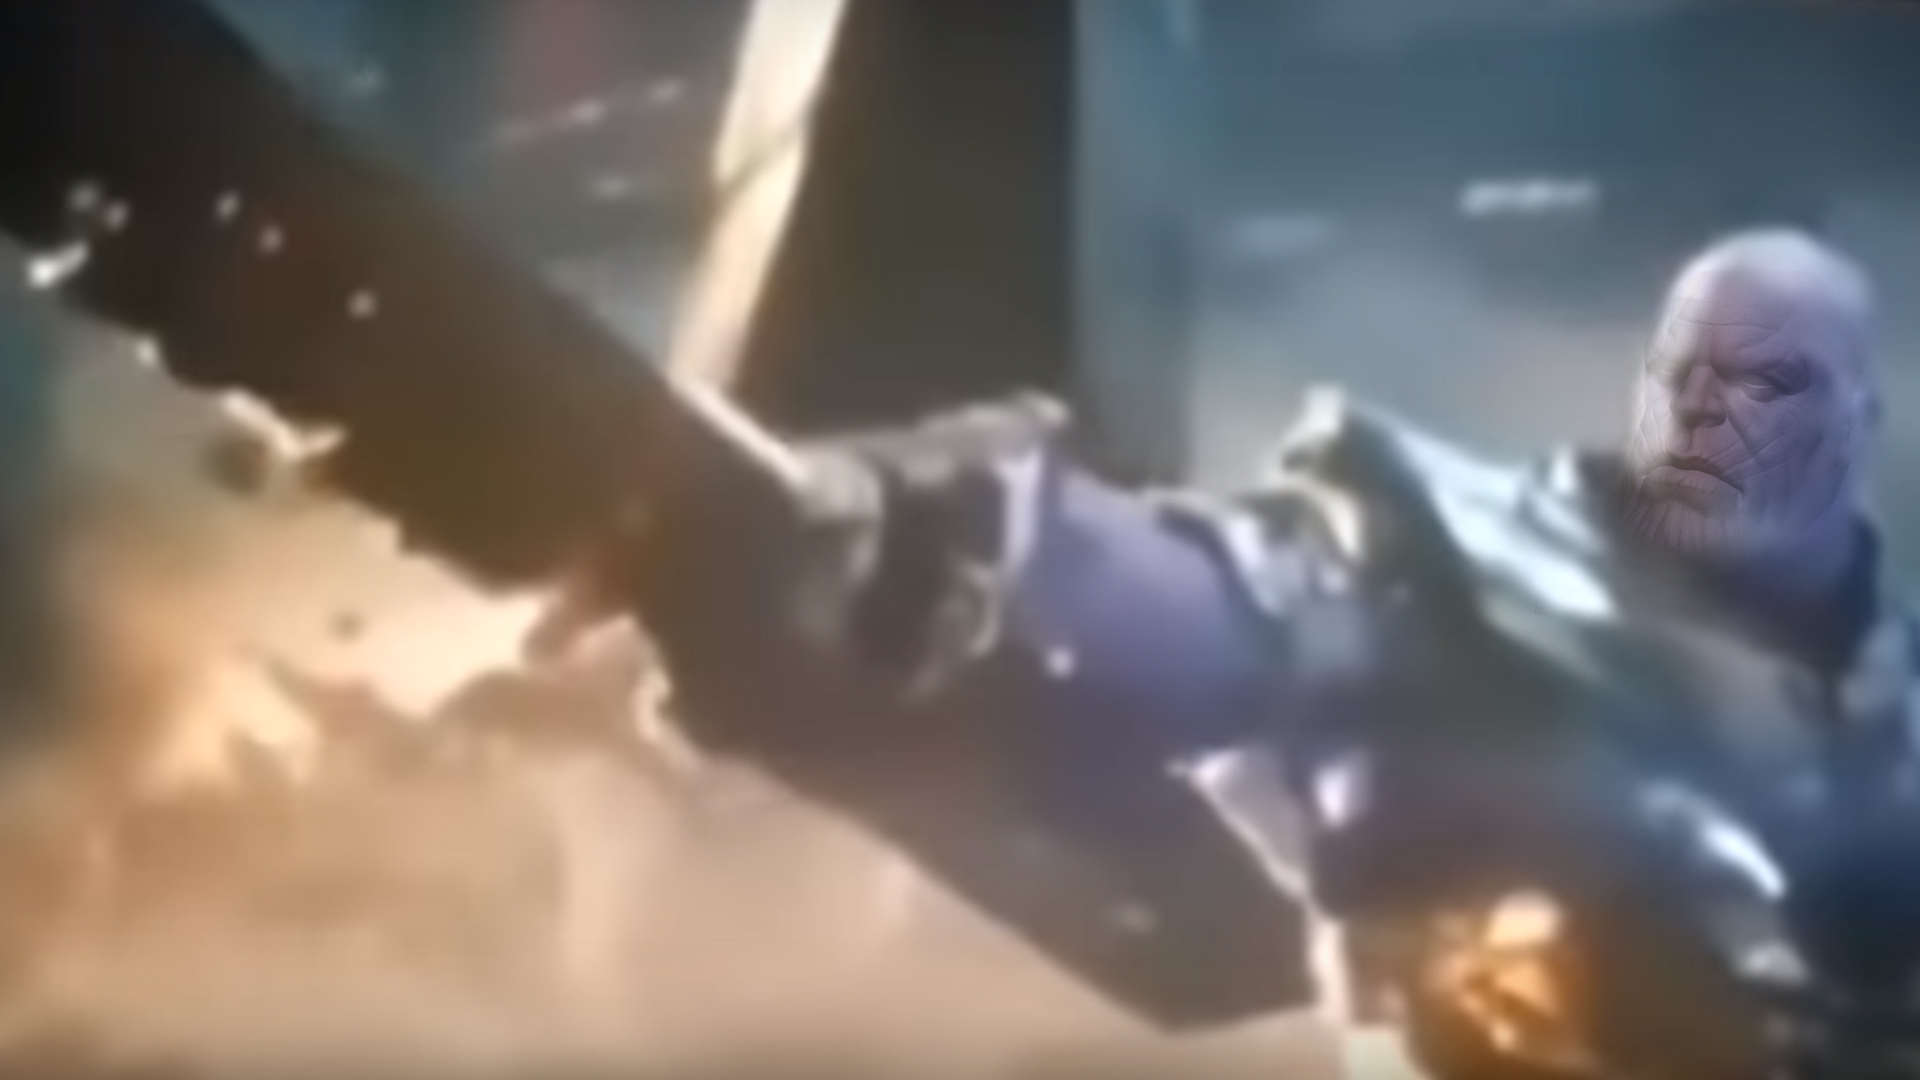 Avengers Endgame 5 Minutes Leak footage explained full movie hd professor hulk infinity gauntlet thanos death captain marvel iron man captain america 2019 April 26 clip